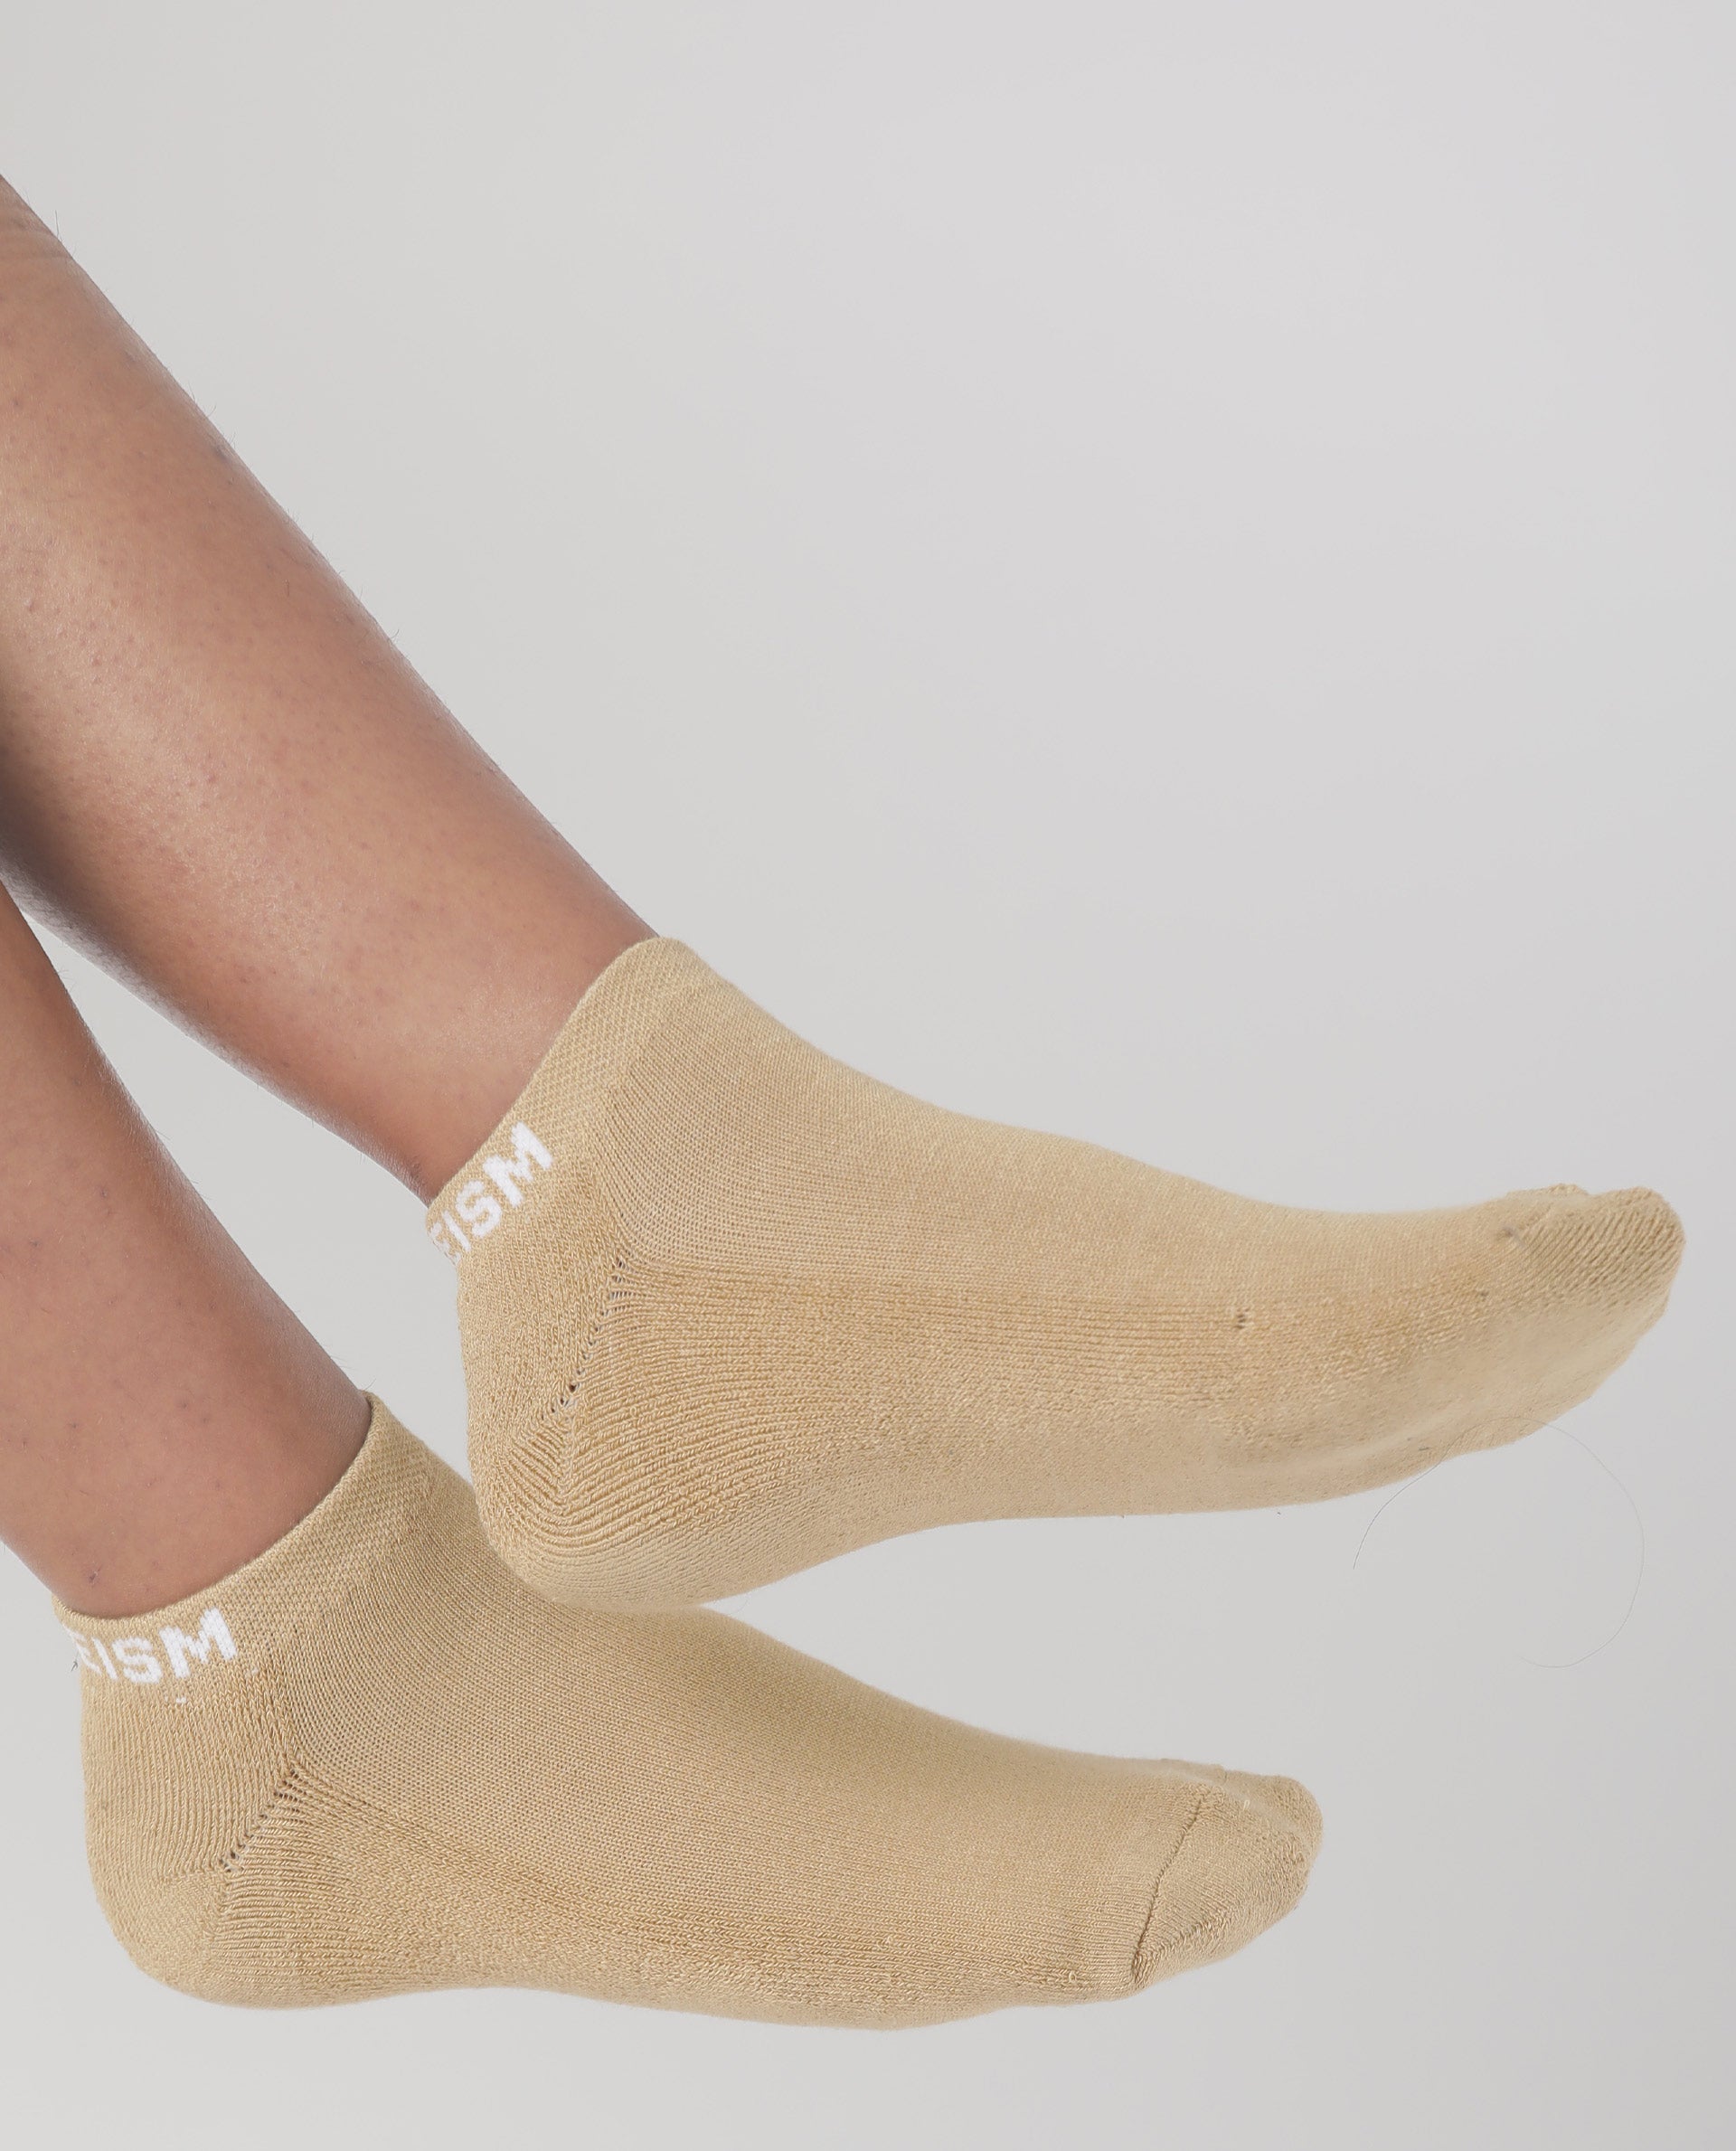 WOMENS Socks BEIGE ORGANIC BAMBOO FABRIC LOW ANKLE